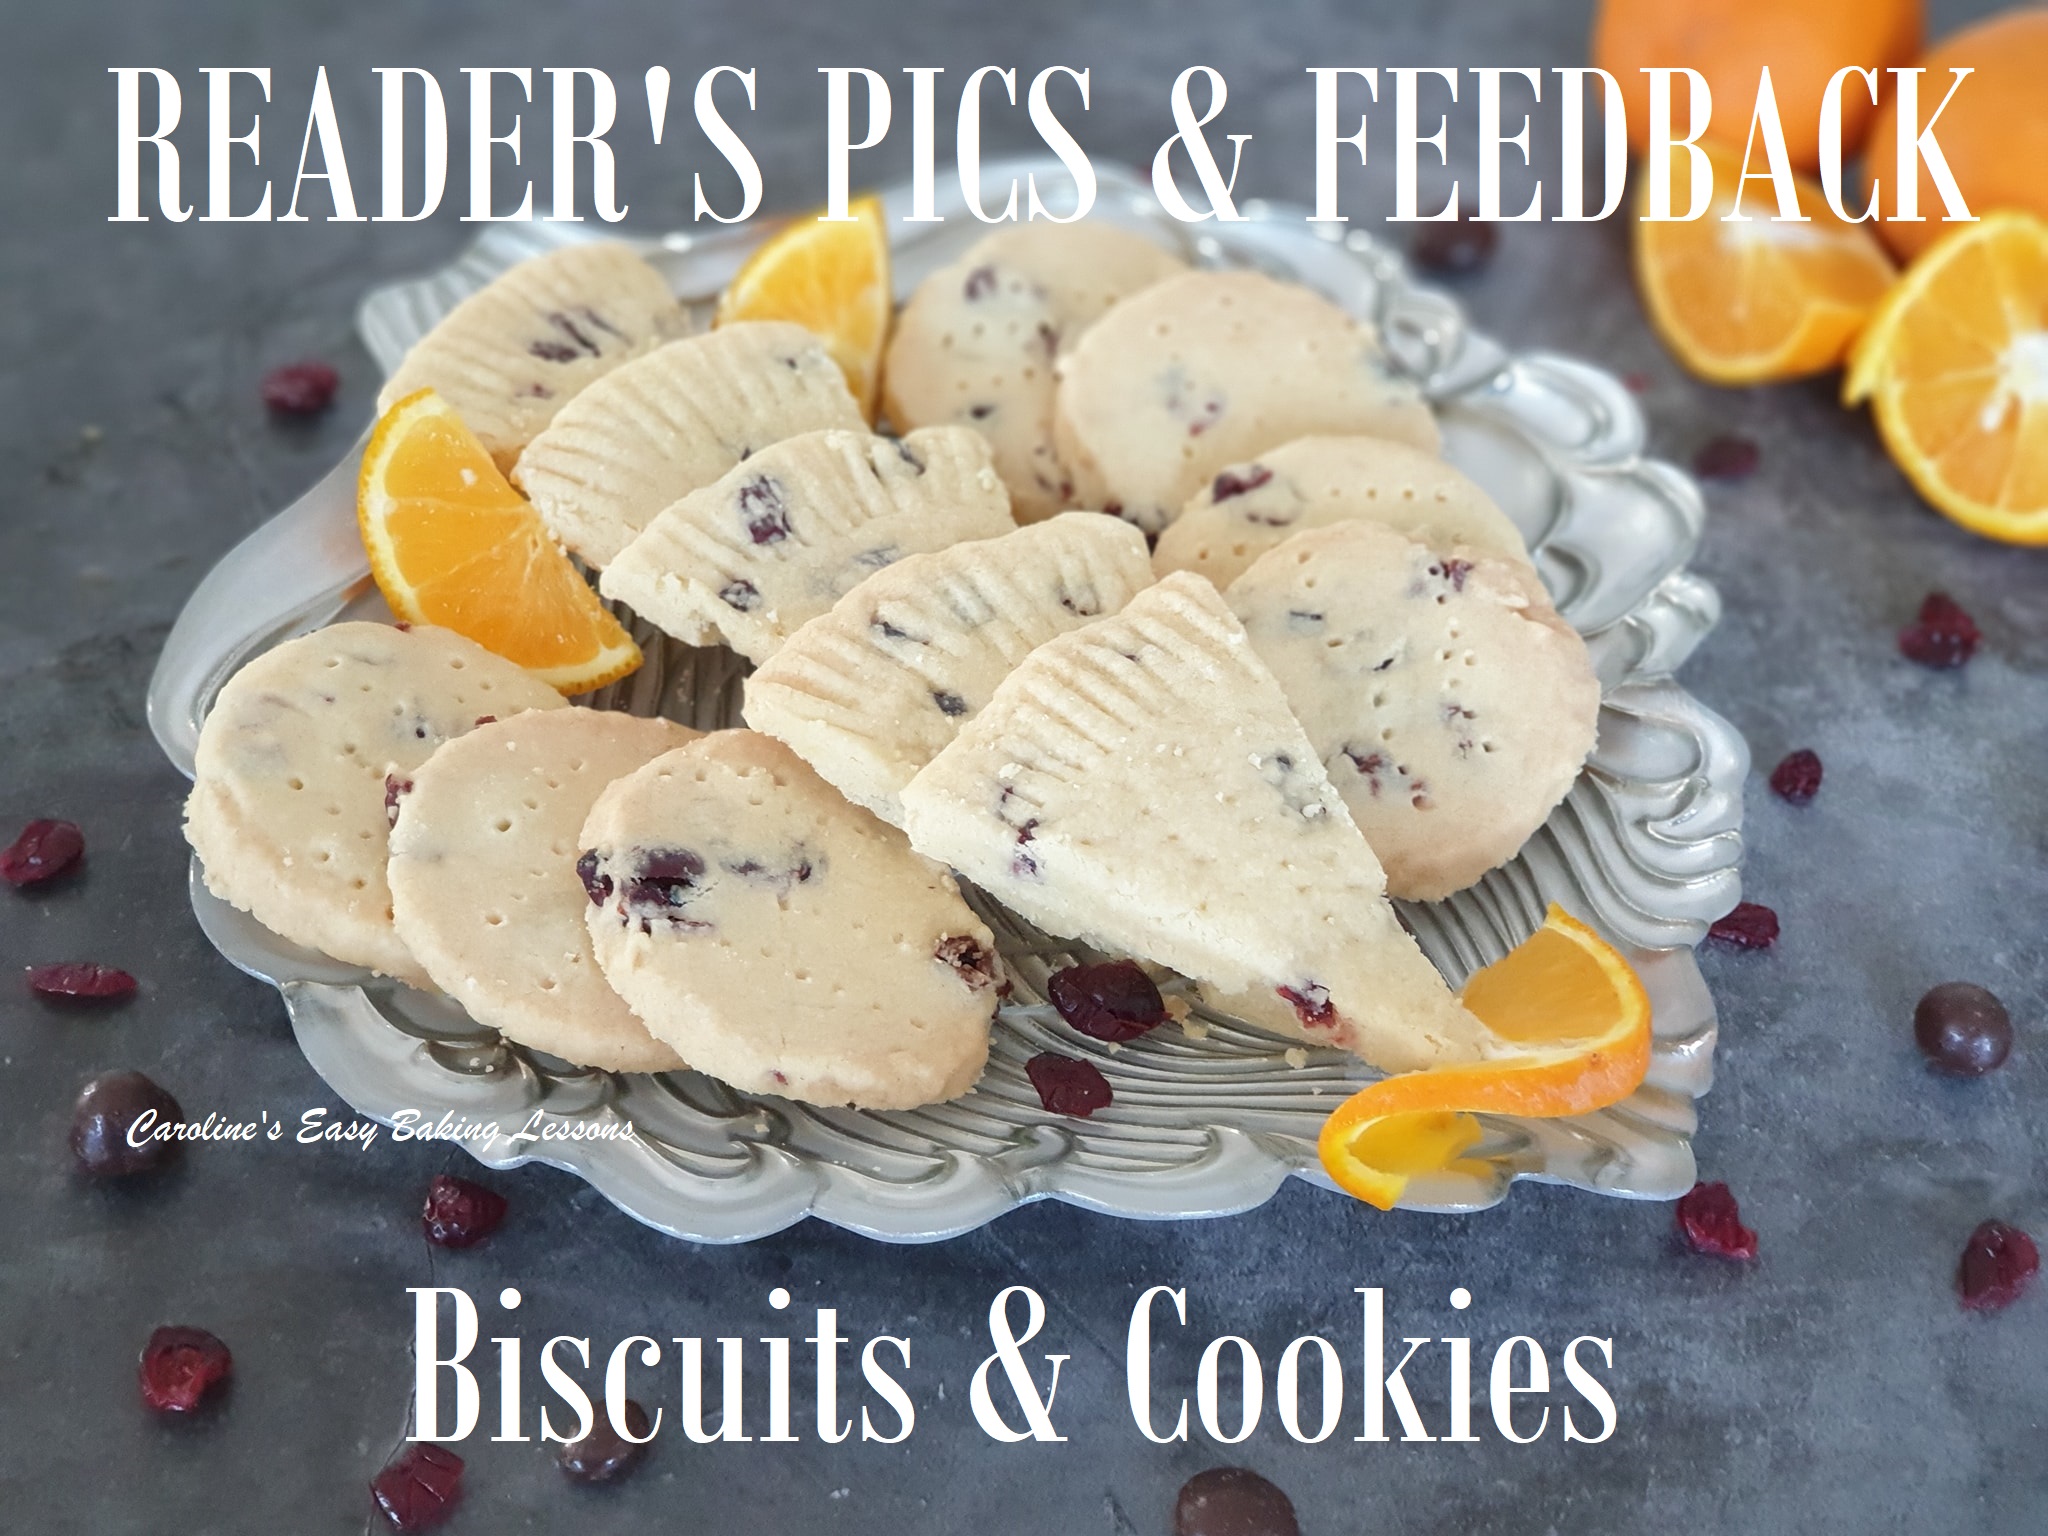 READERS’ PHOTOS & FEEDBACK – Biscuits & Cookies